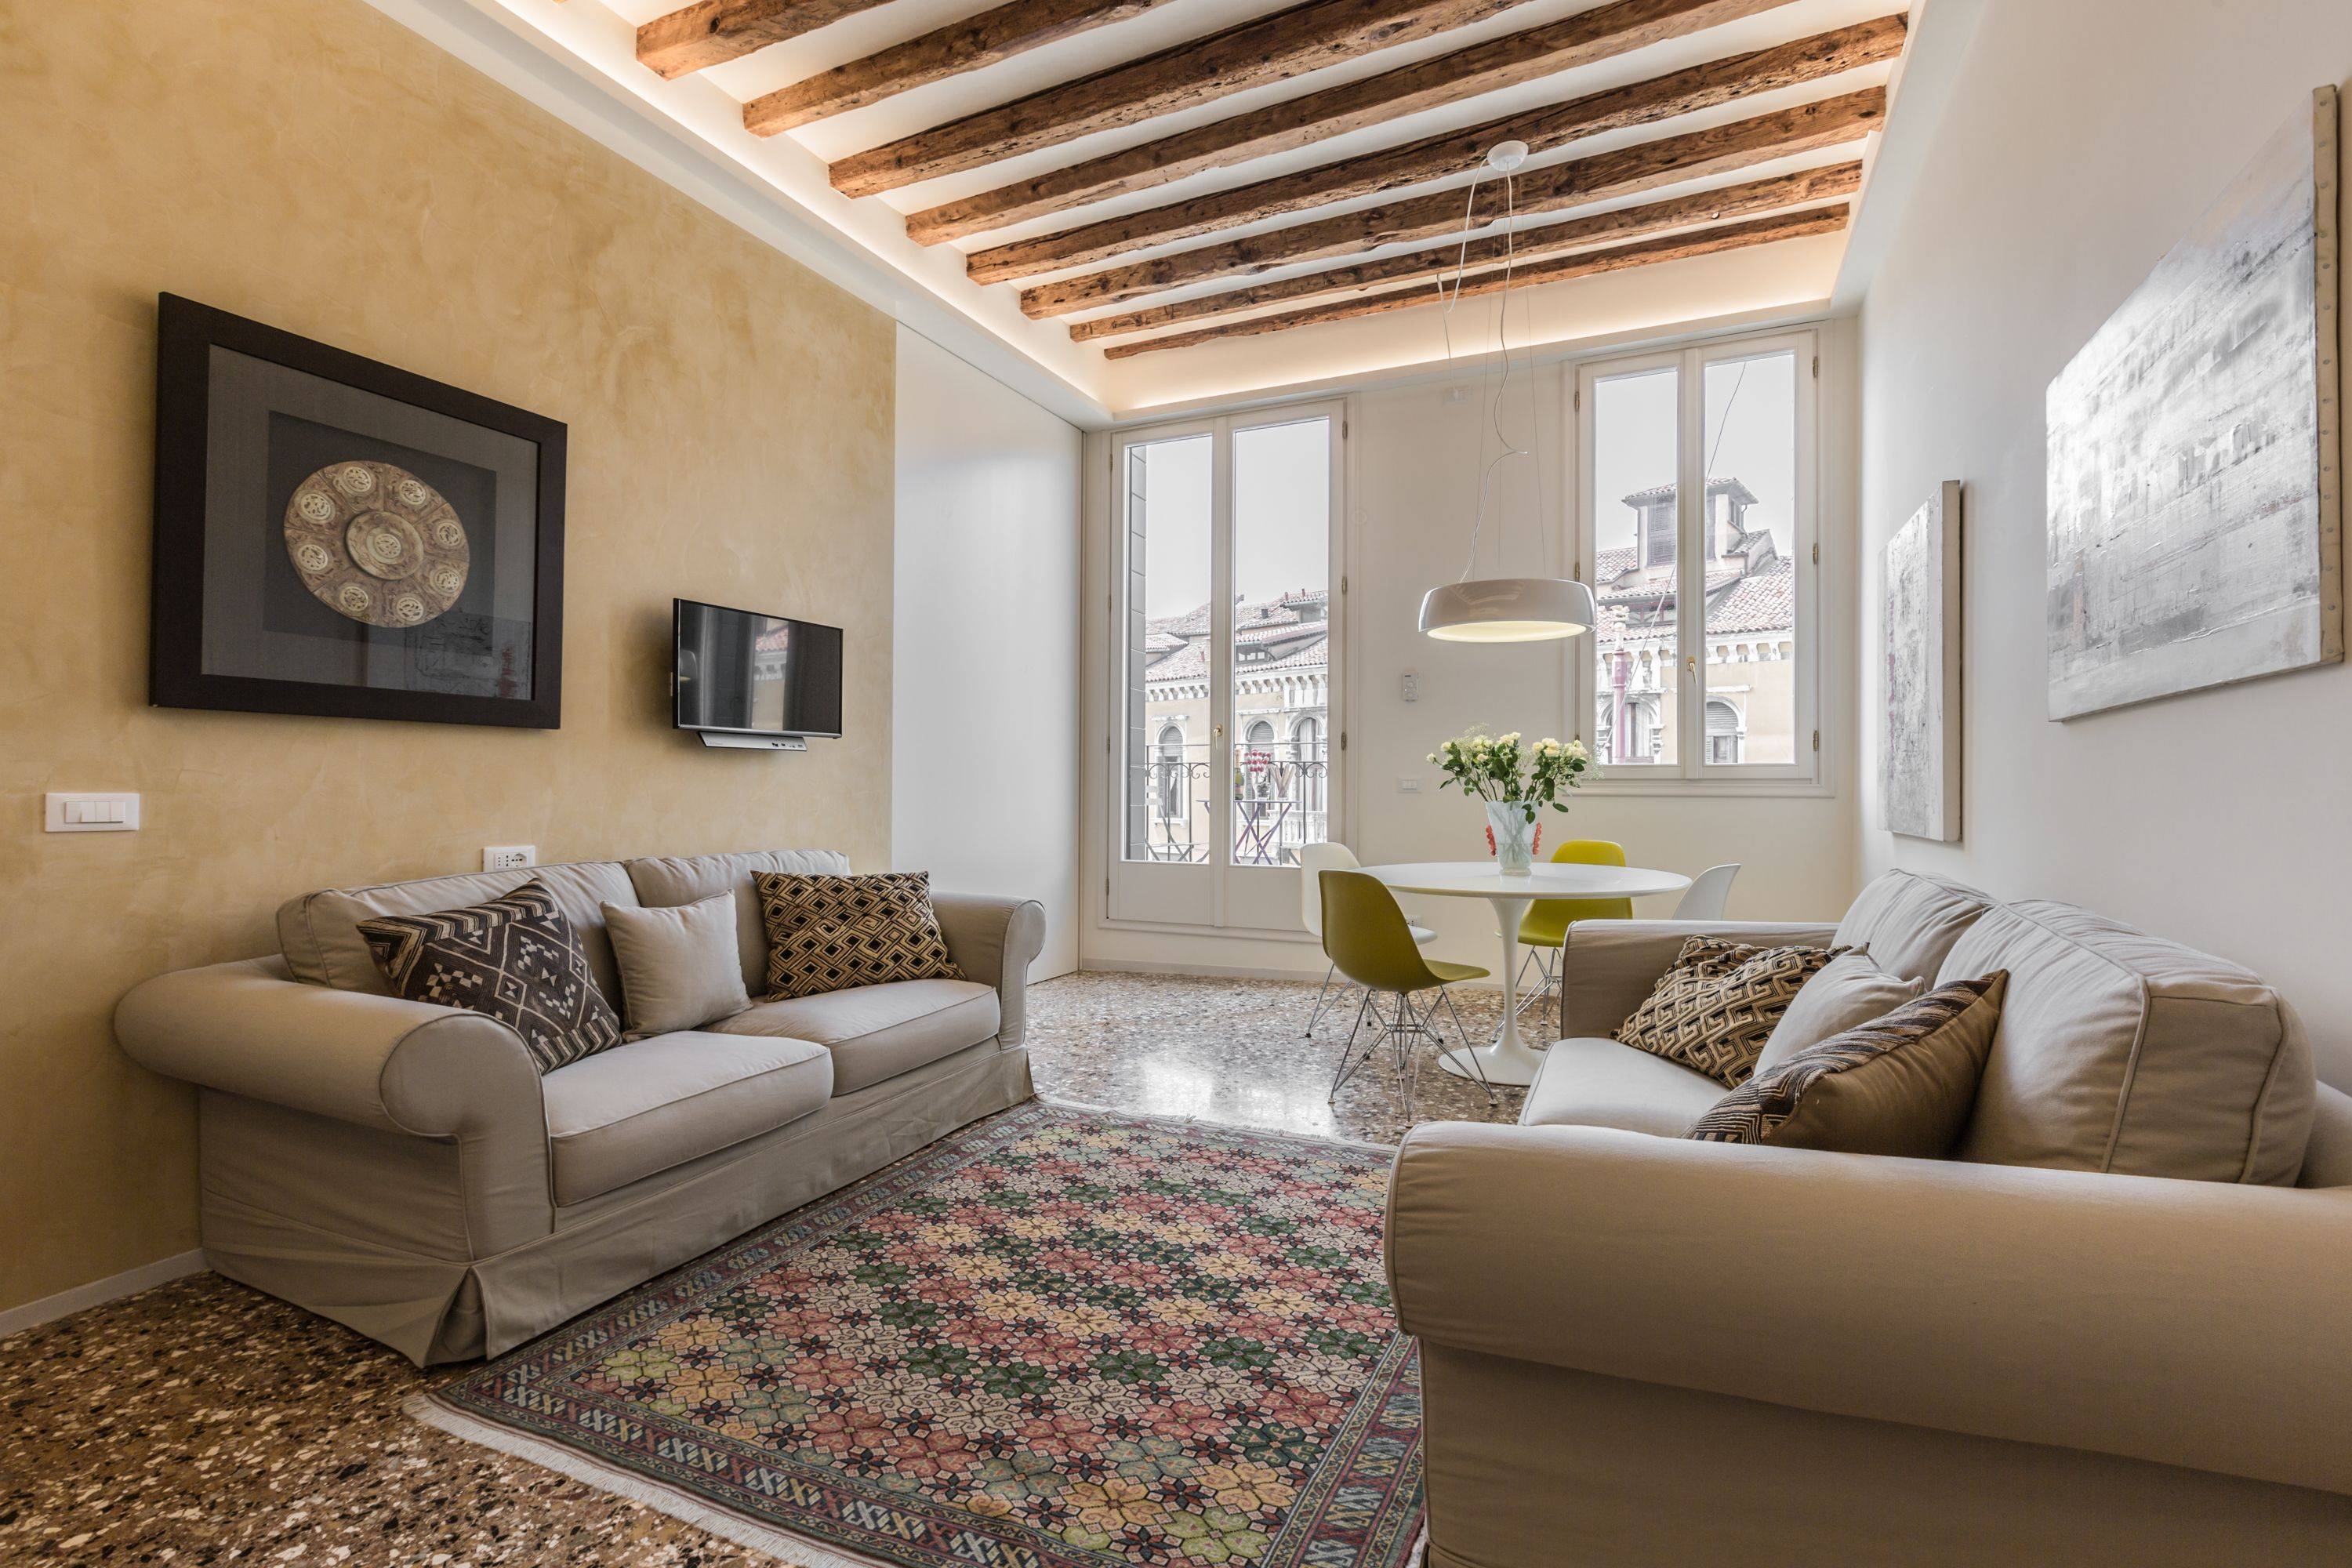 comfortable sofas, terrazzo Veneziano flooring, antique wooden beamed ceiling, plenty of natural light